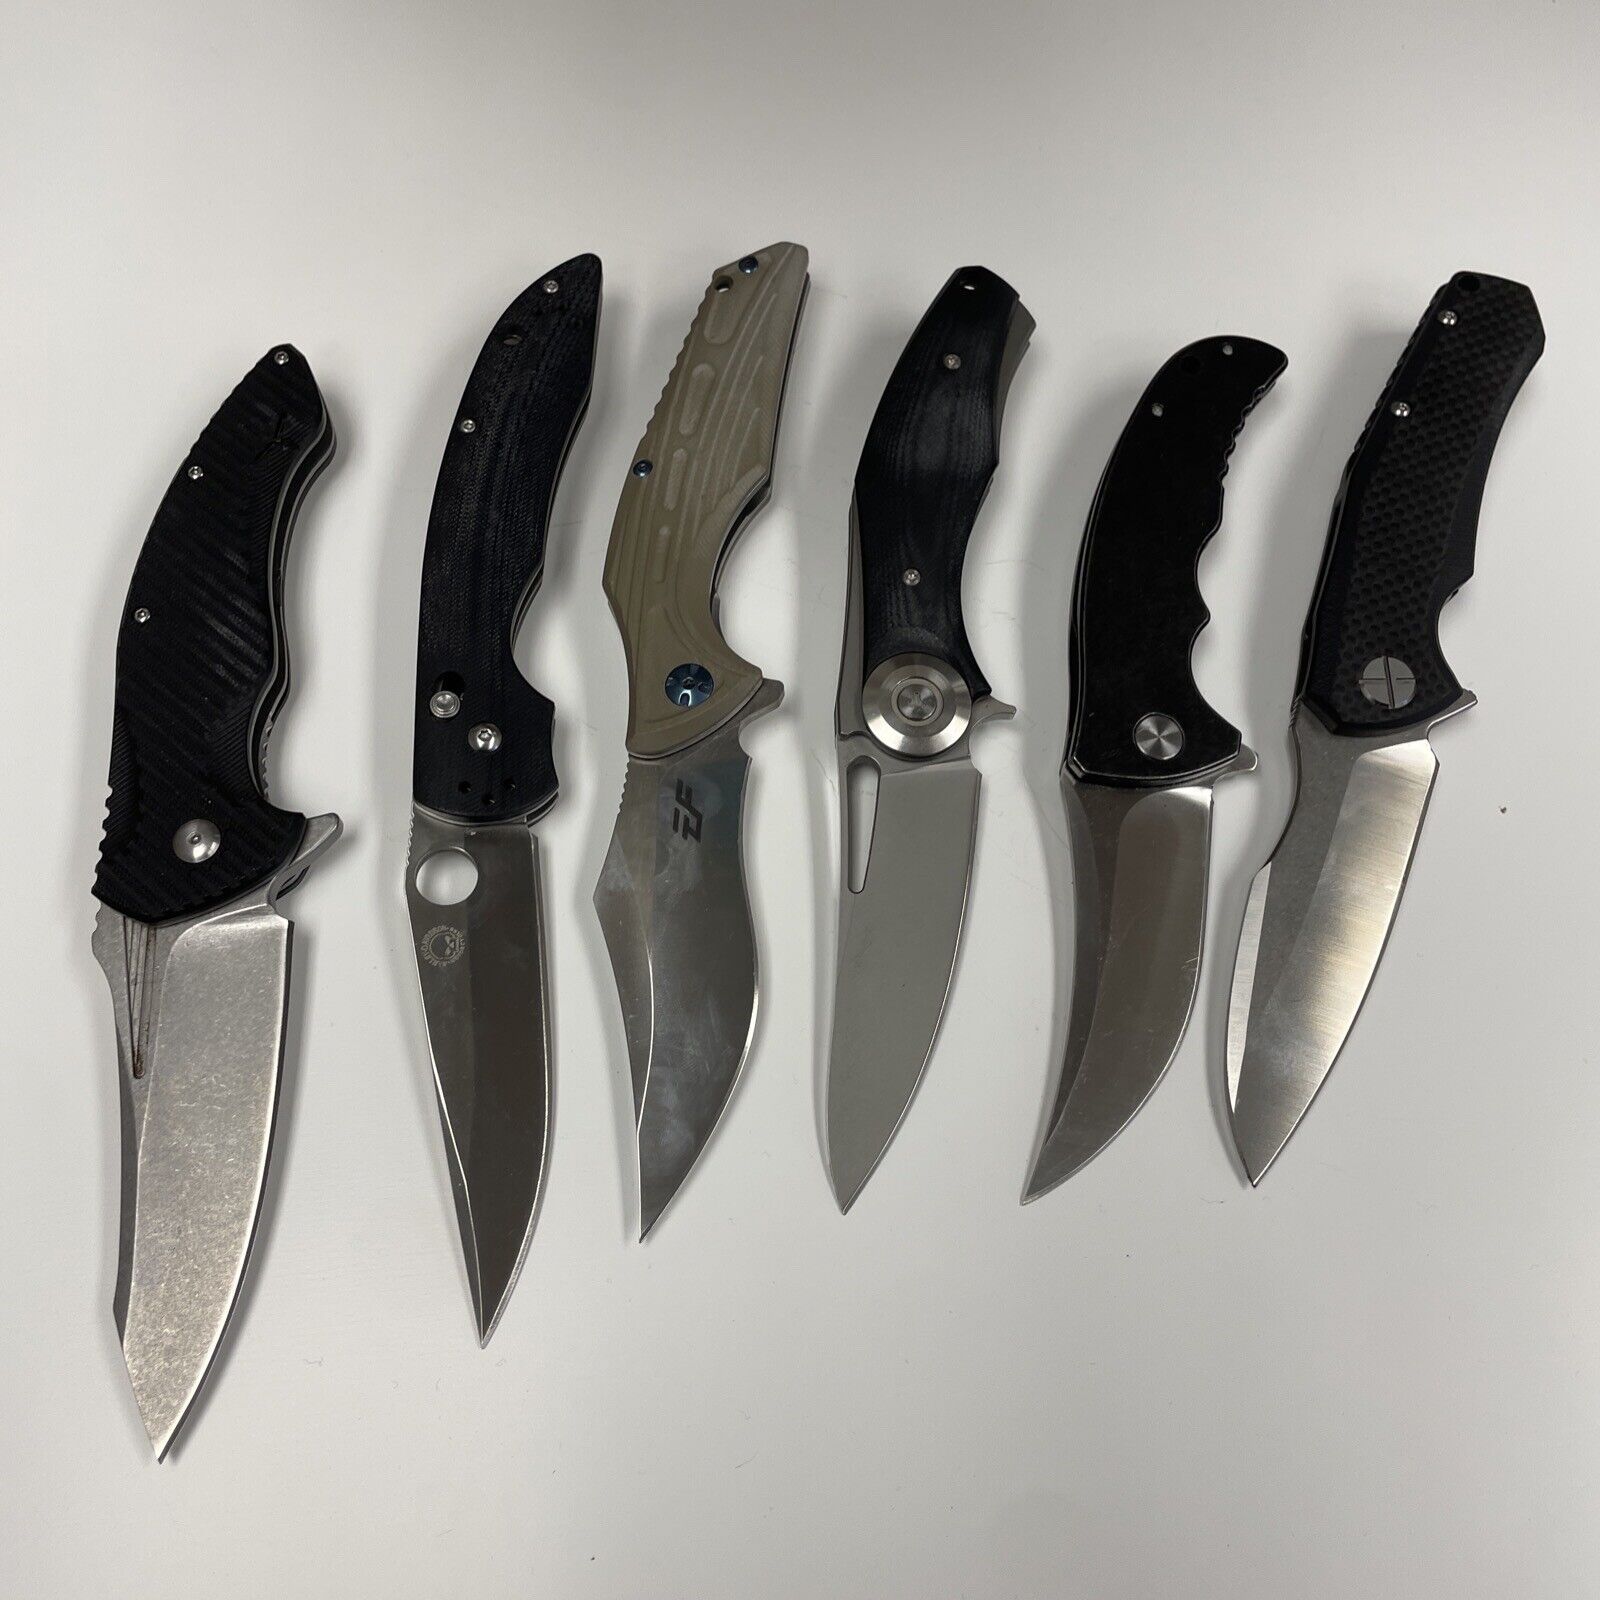 Lot of 6 knives - pocket knives, folding knives